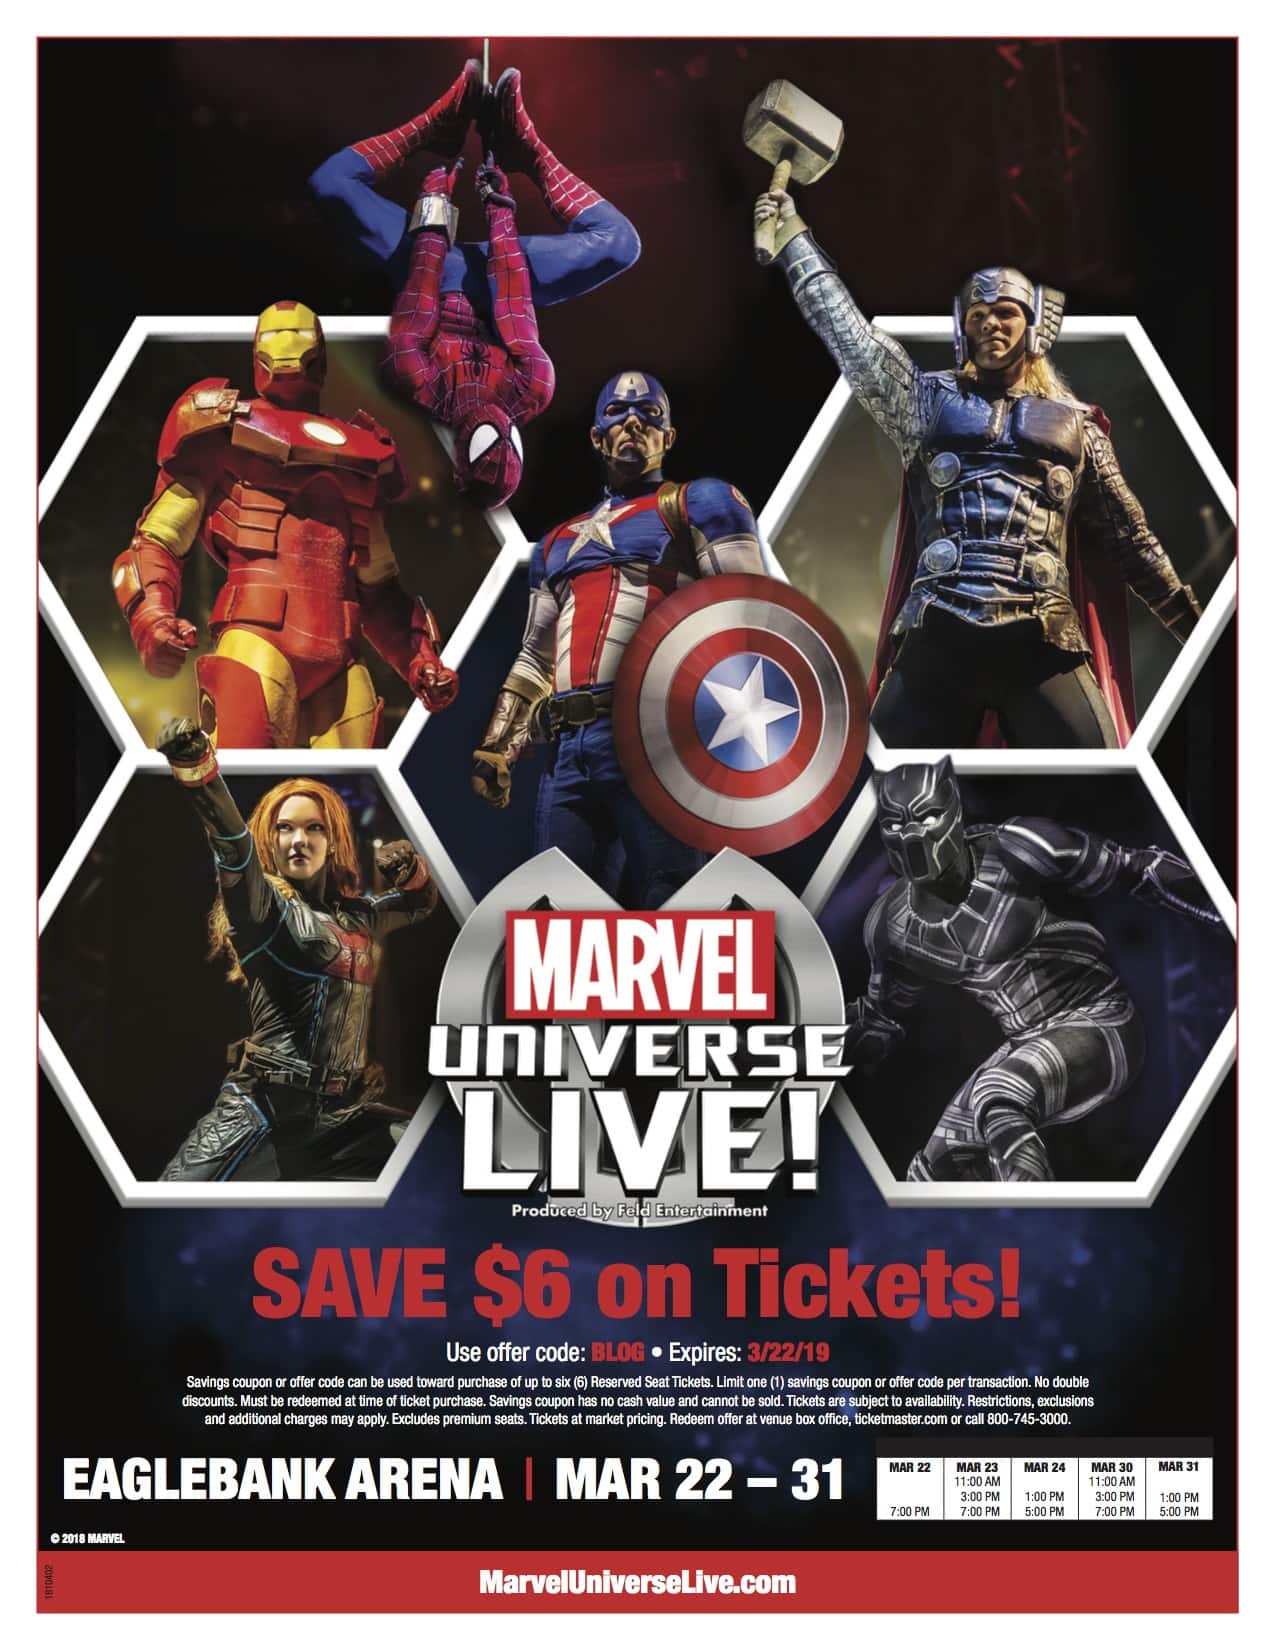 Marvel Universe Live Ticket Giveaway